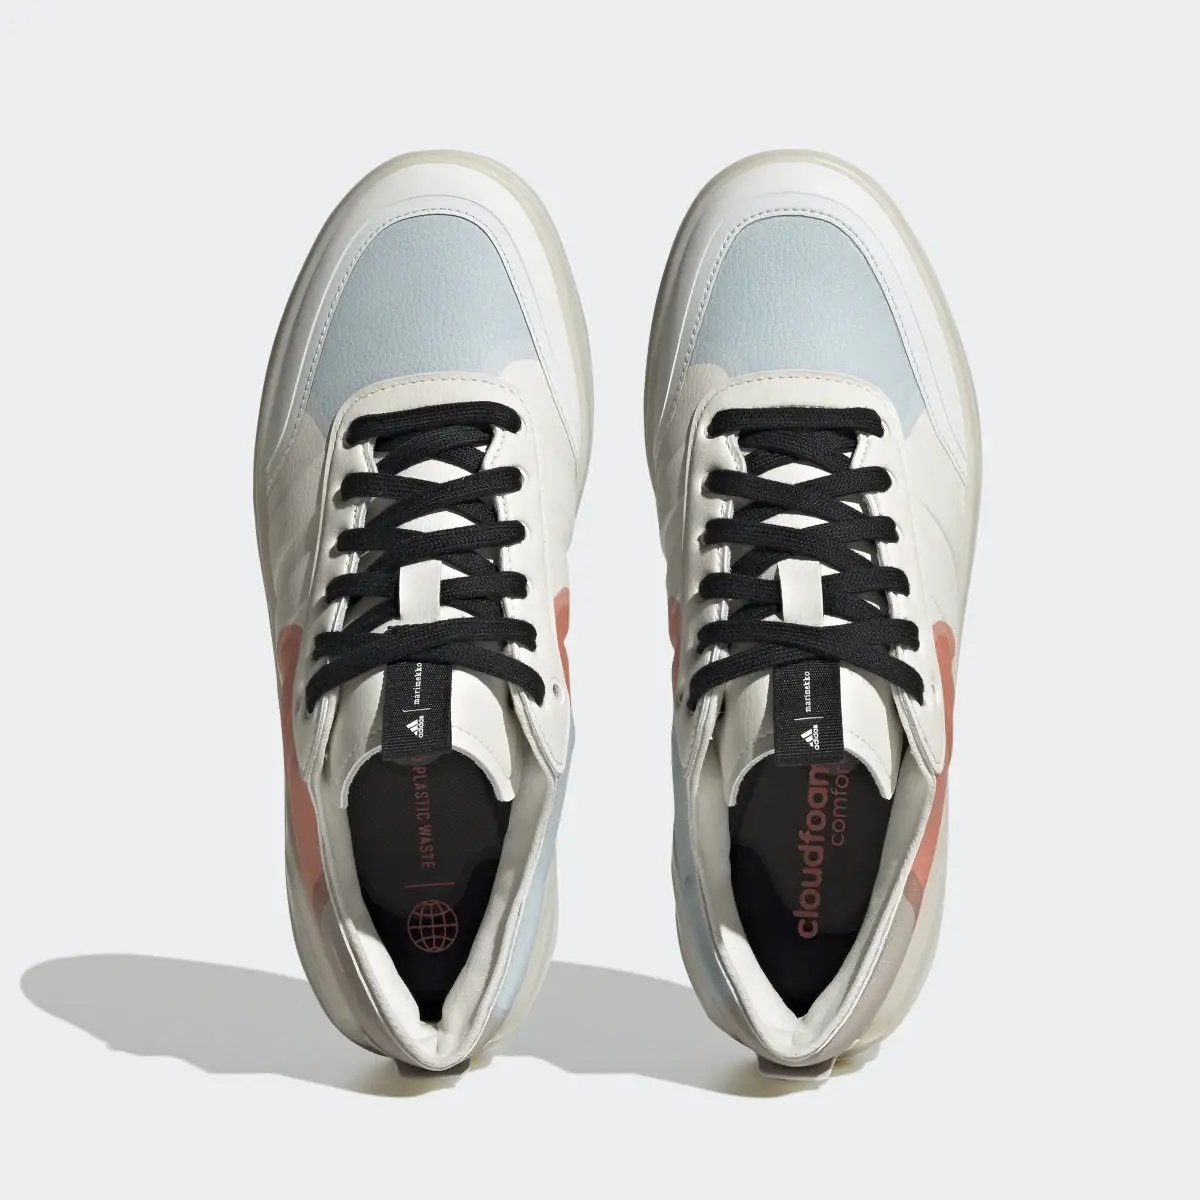 Adidas Scarpe adidas x Marimekko Court Revival. 3